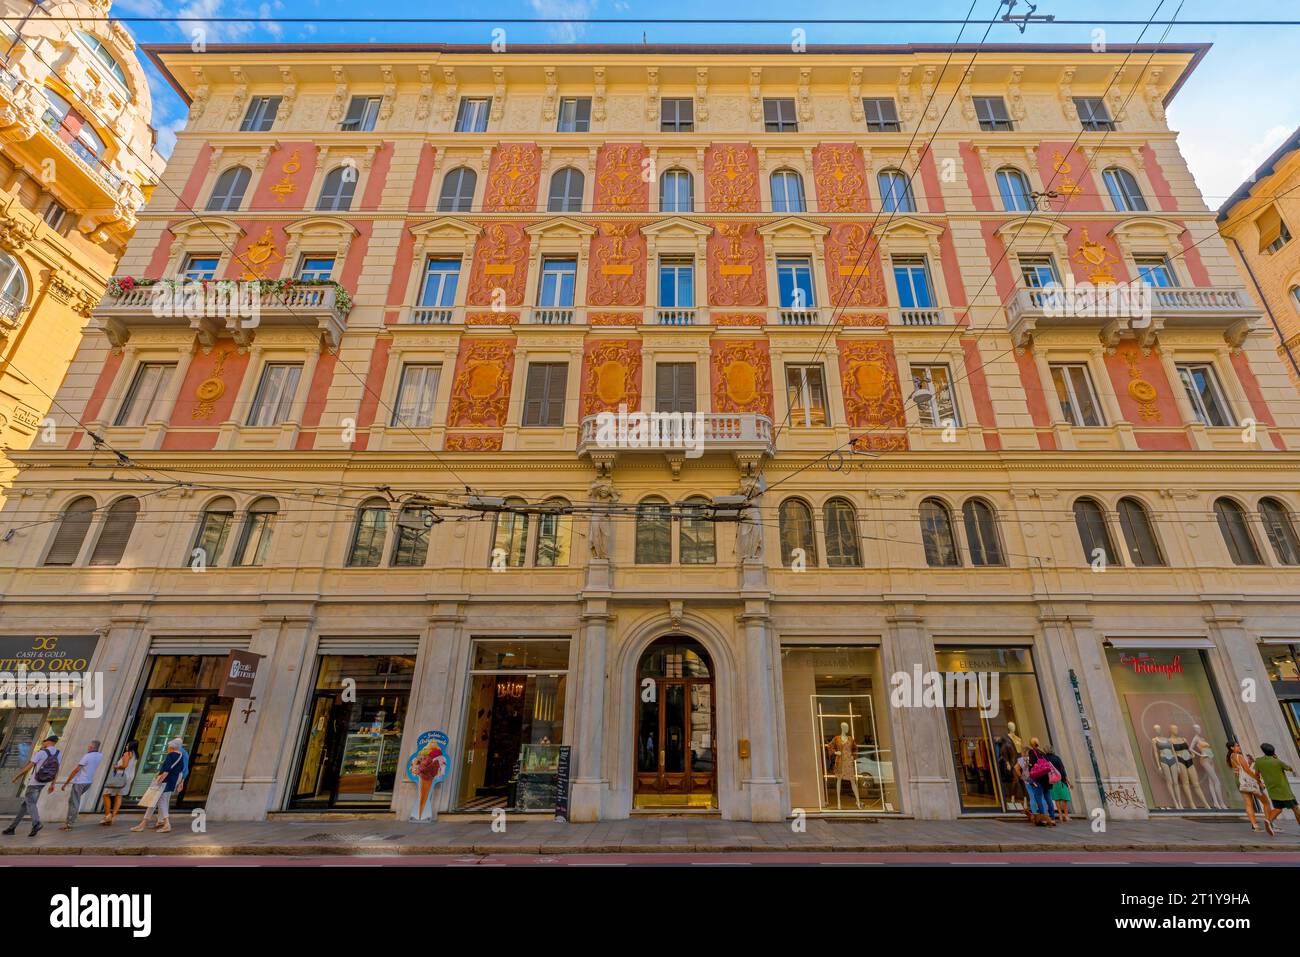 Lxury building in Art Nouveau style on south side of Via XX Settembre (31 Via XX Settembre), Genova city centre, Italy. Stock Photo